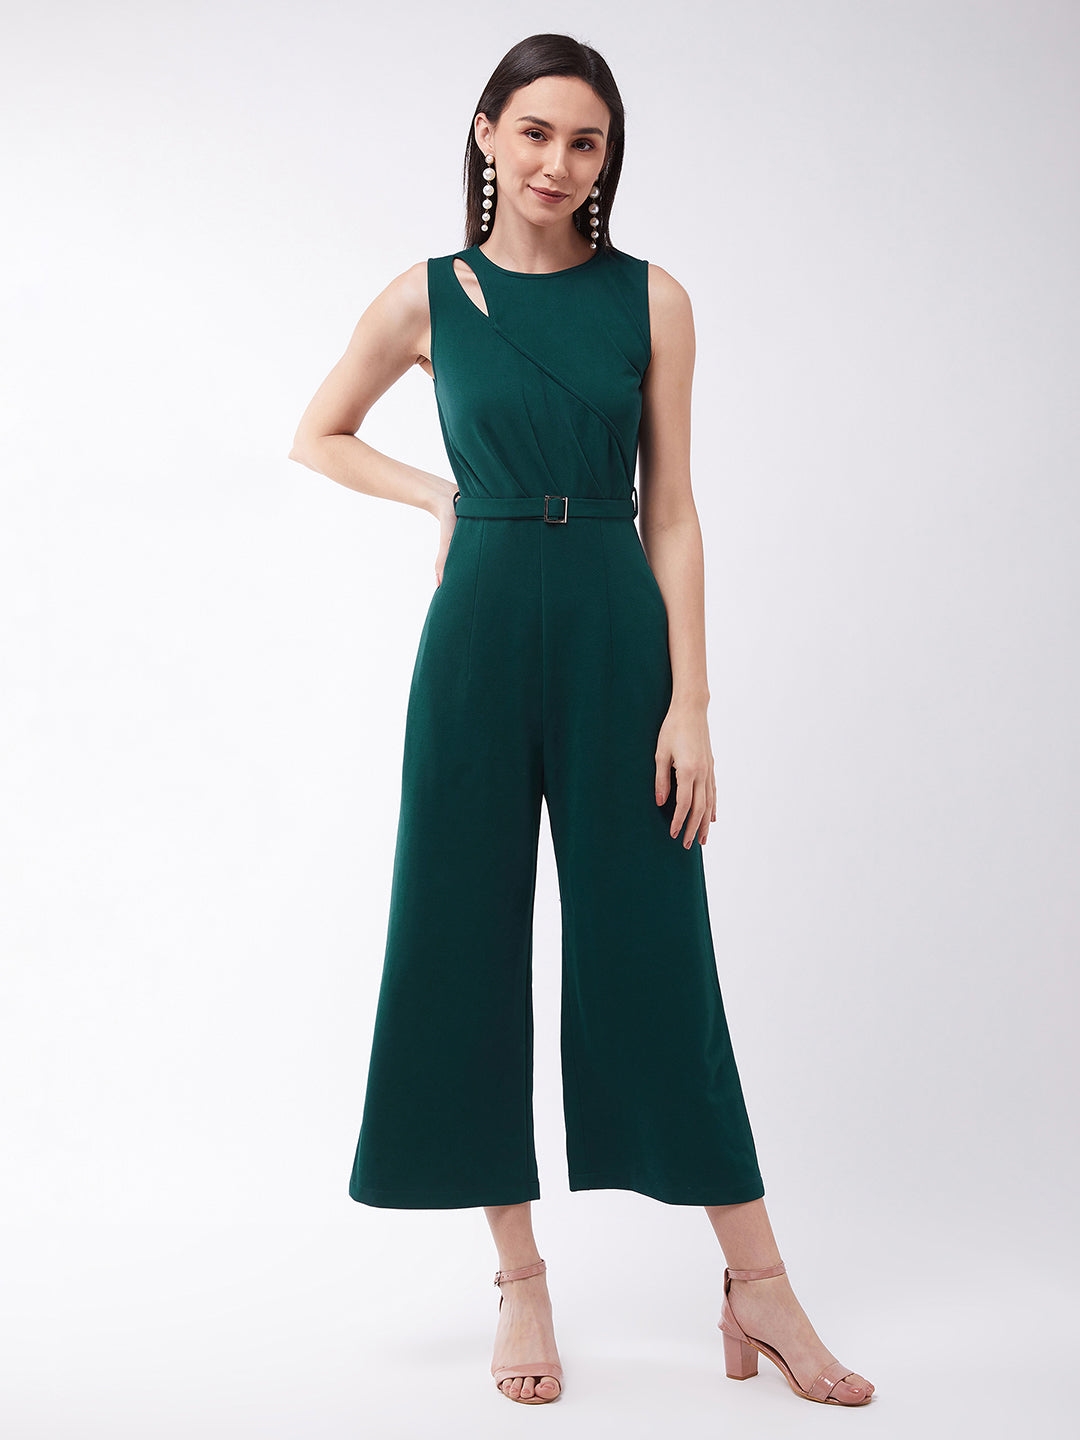 Green Solid Polyester Regular Fit Round Neck Sleeveless Regular Length Jumpsuit